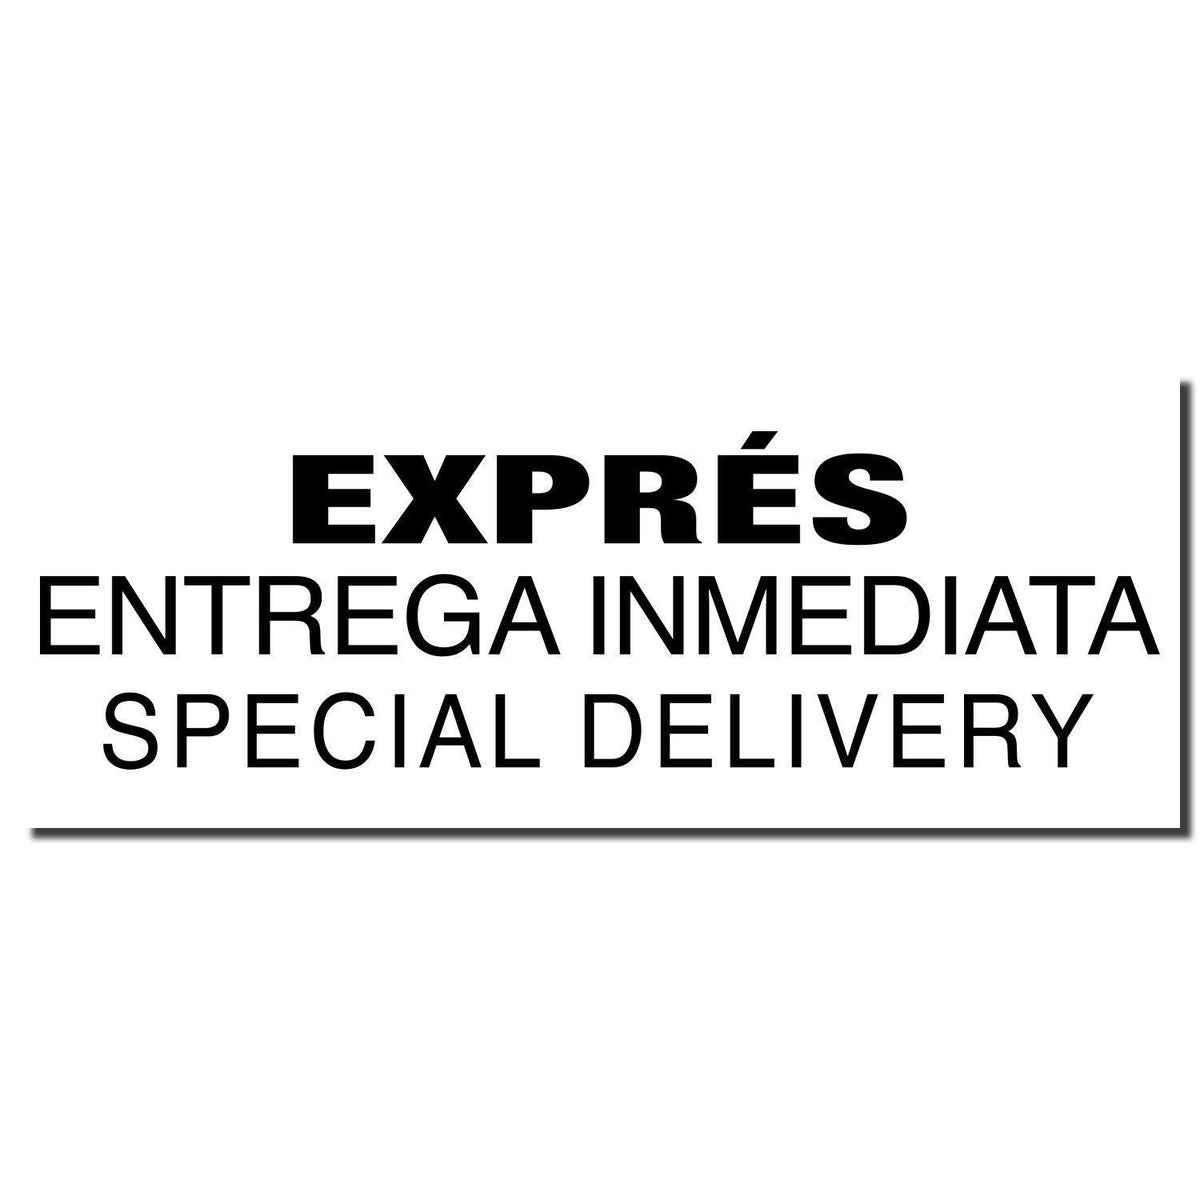 Enlarged Imprint Expres Entrega Inmedia Rubber Stamp Sample